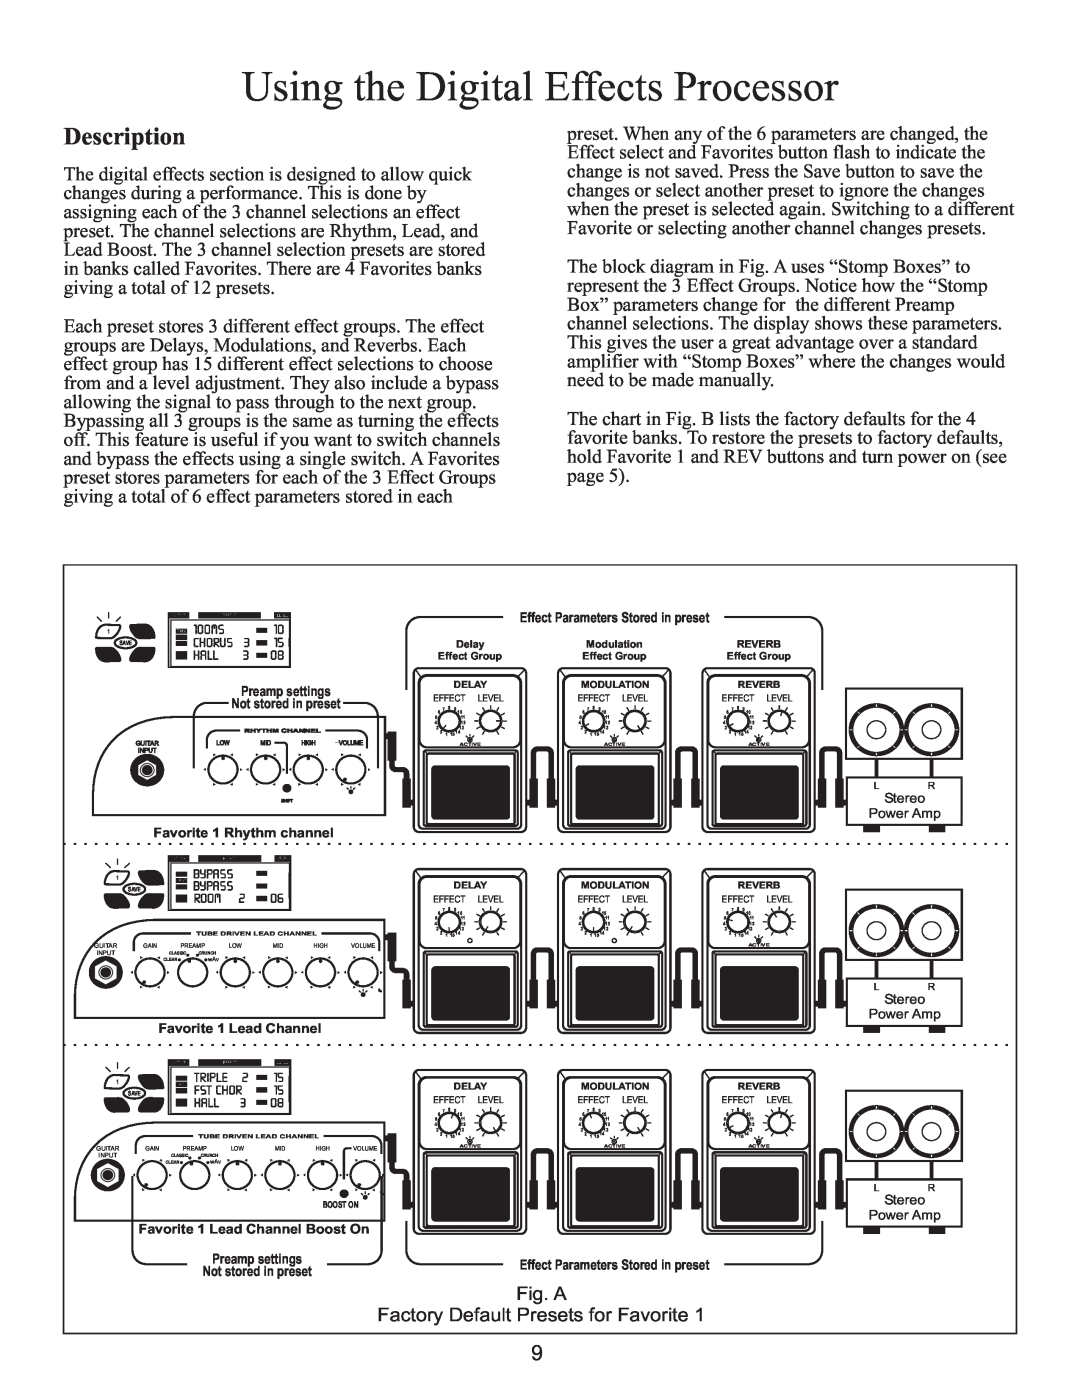 Kustom WAV 212 owner manual Using the Digital Effects Processor, Description 